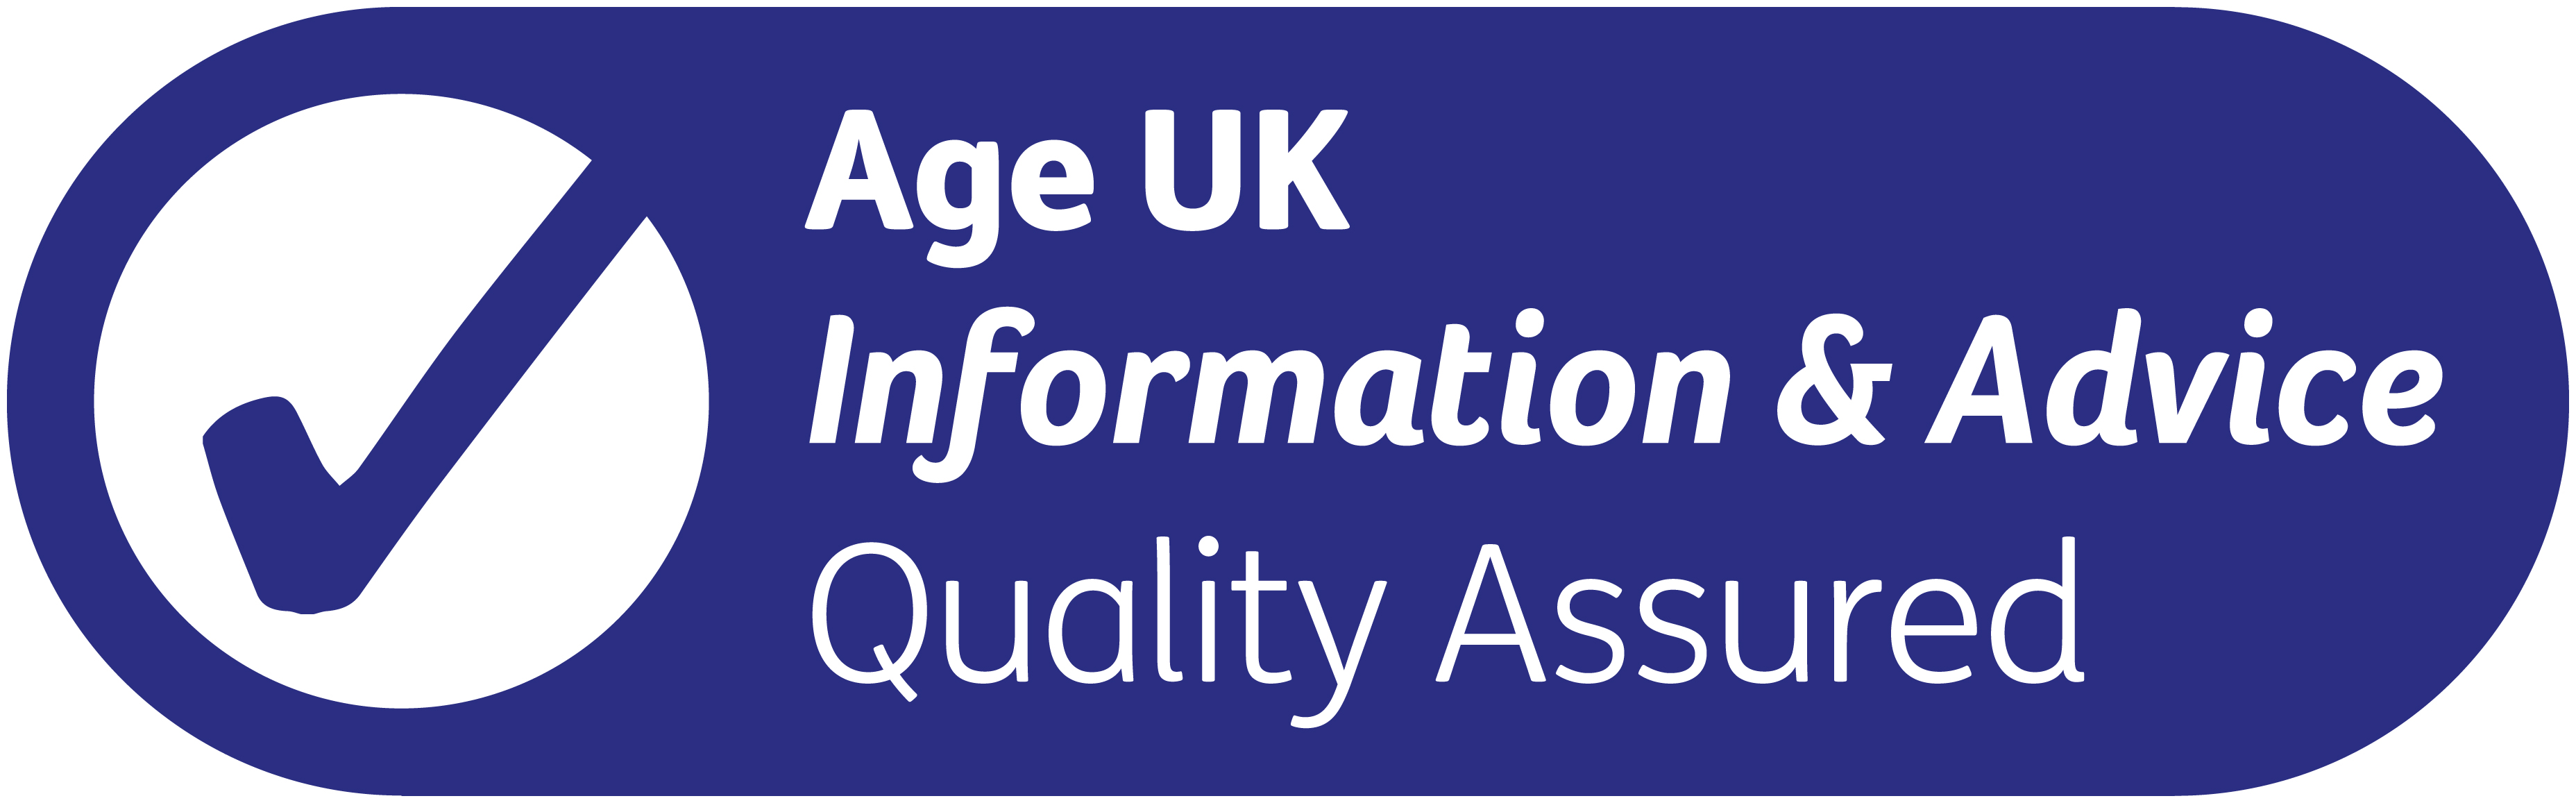 Age UK I&A Quality Assured Logo